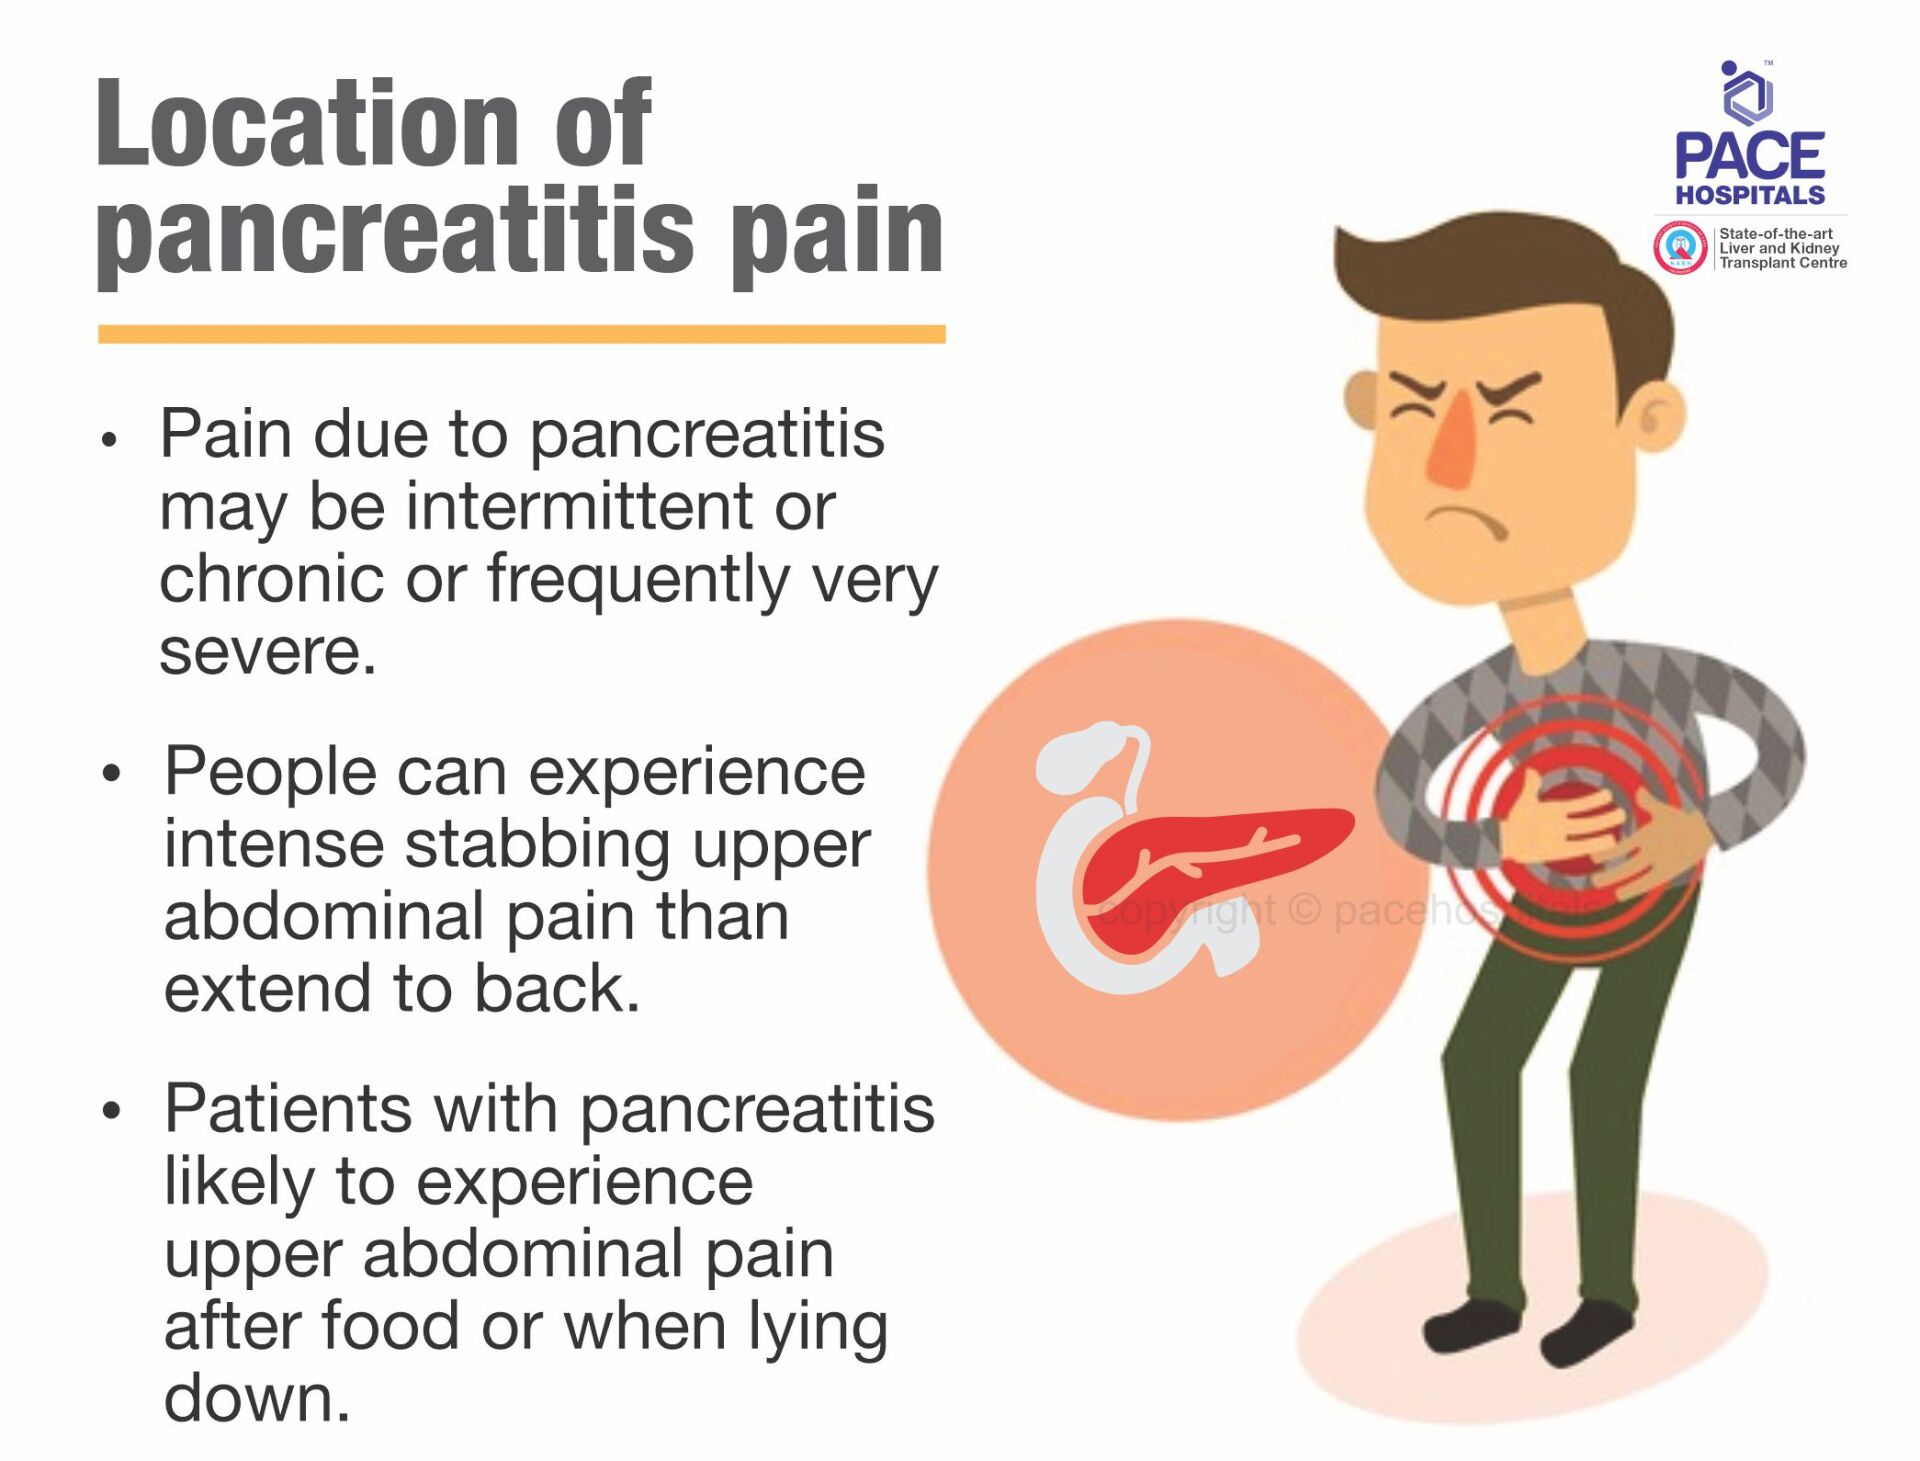 pancreatitis pain location in human body - severe abdominal pain